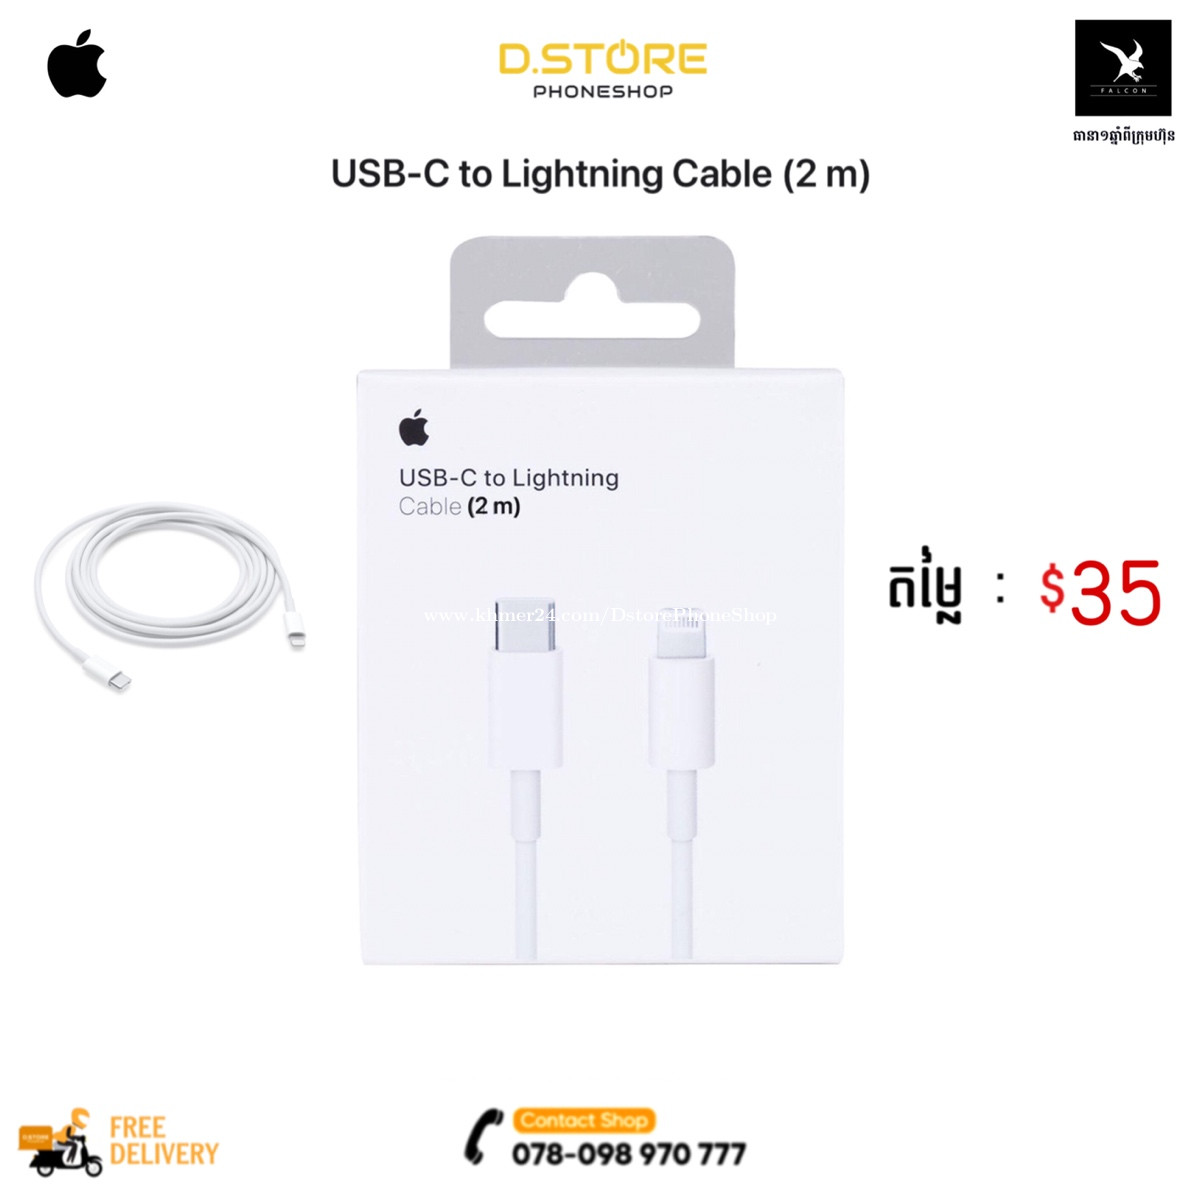  Apple USB-C to Lightning Cable (2m) Original price $35 in Phnom Penh,  Cambodia - D-Store Phone Shop 